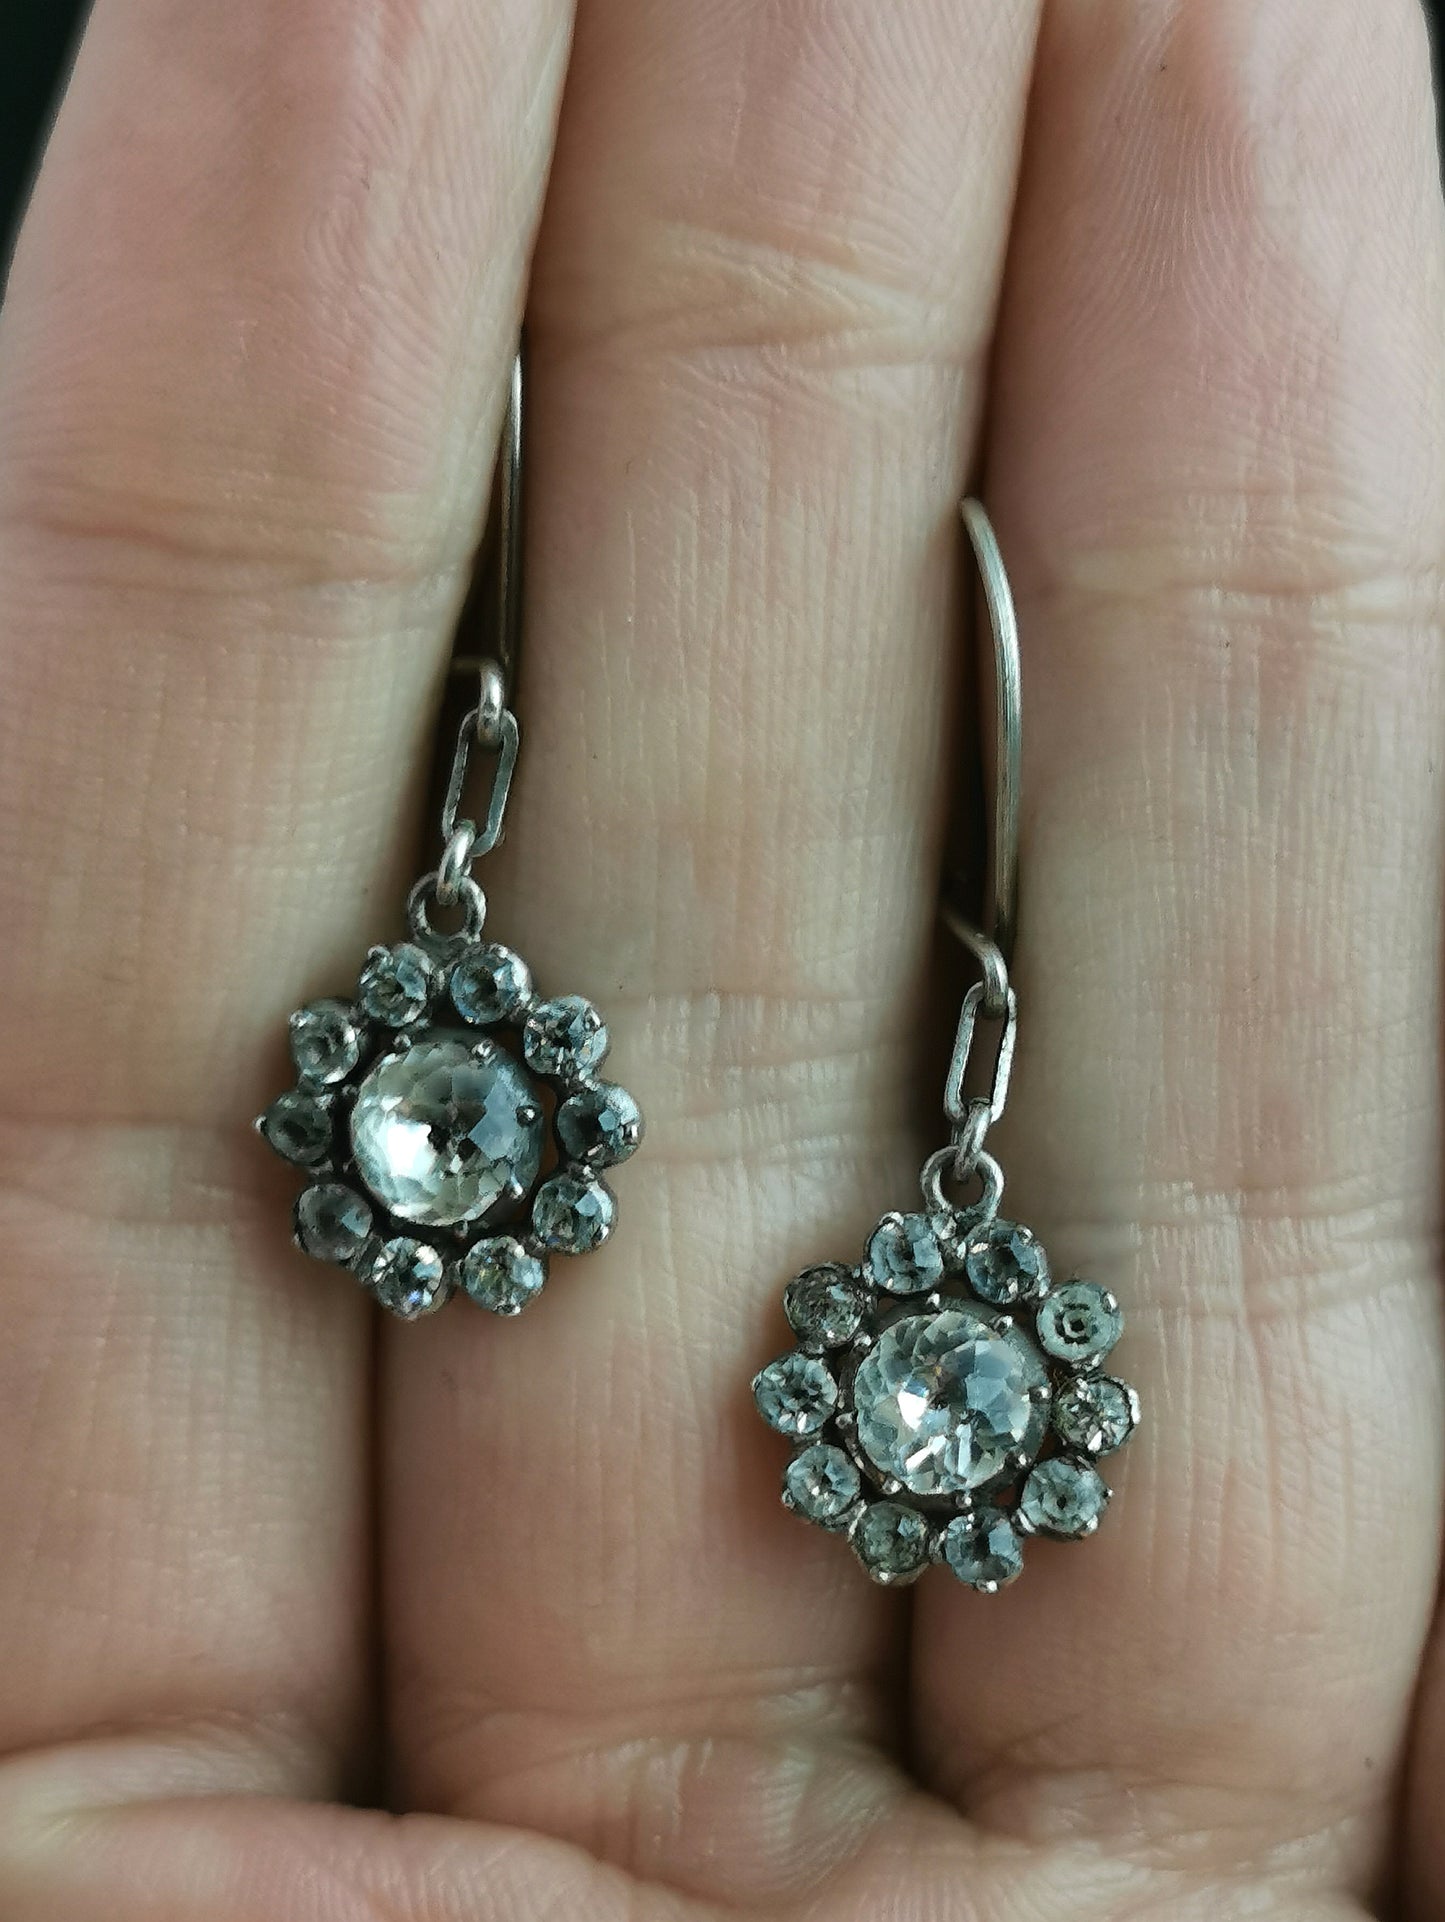 Antique Georgian black dot paste flower earrings, Sterling silver